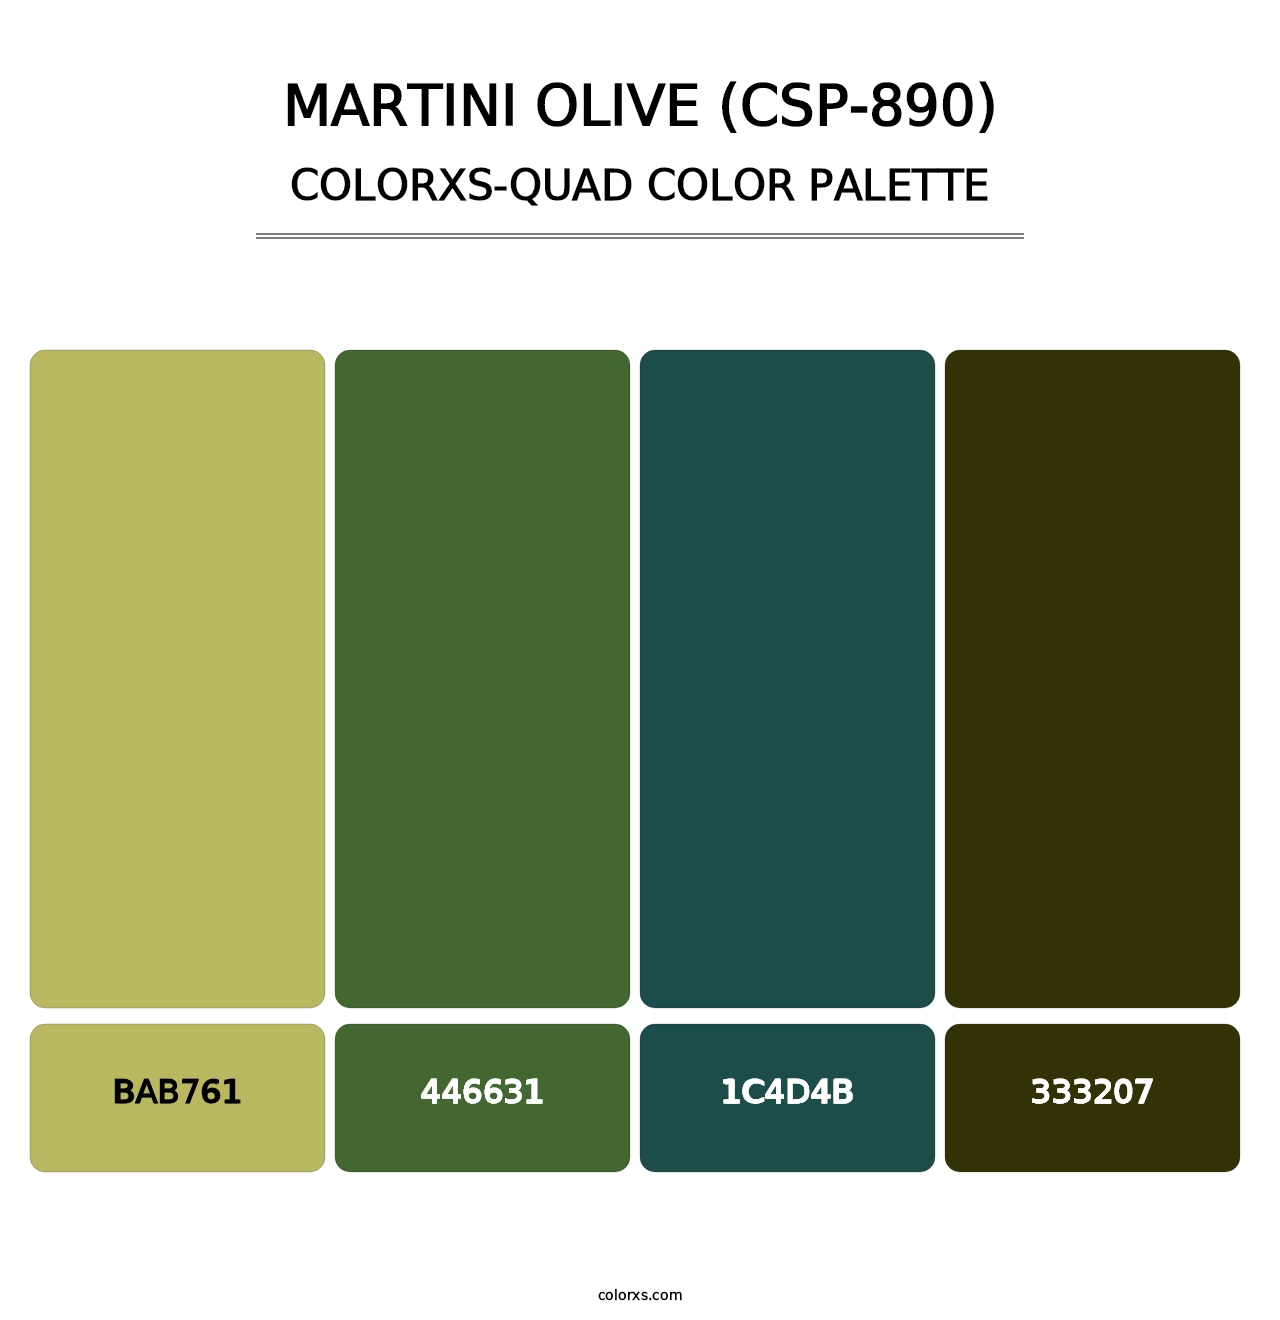 Martini Olive (CSP-890) - Colorxs Quad Palette